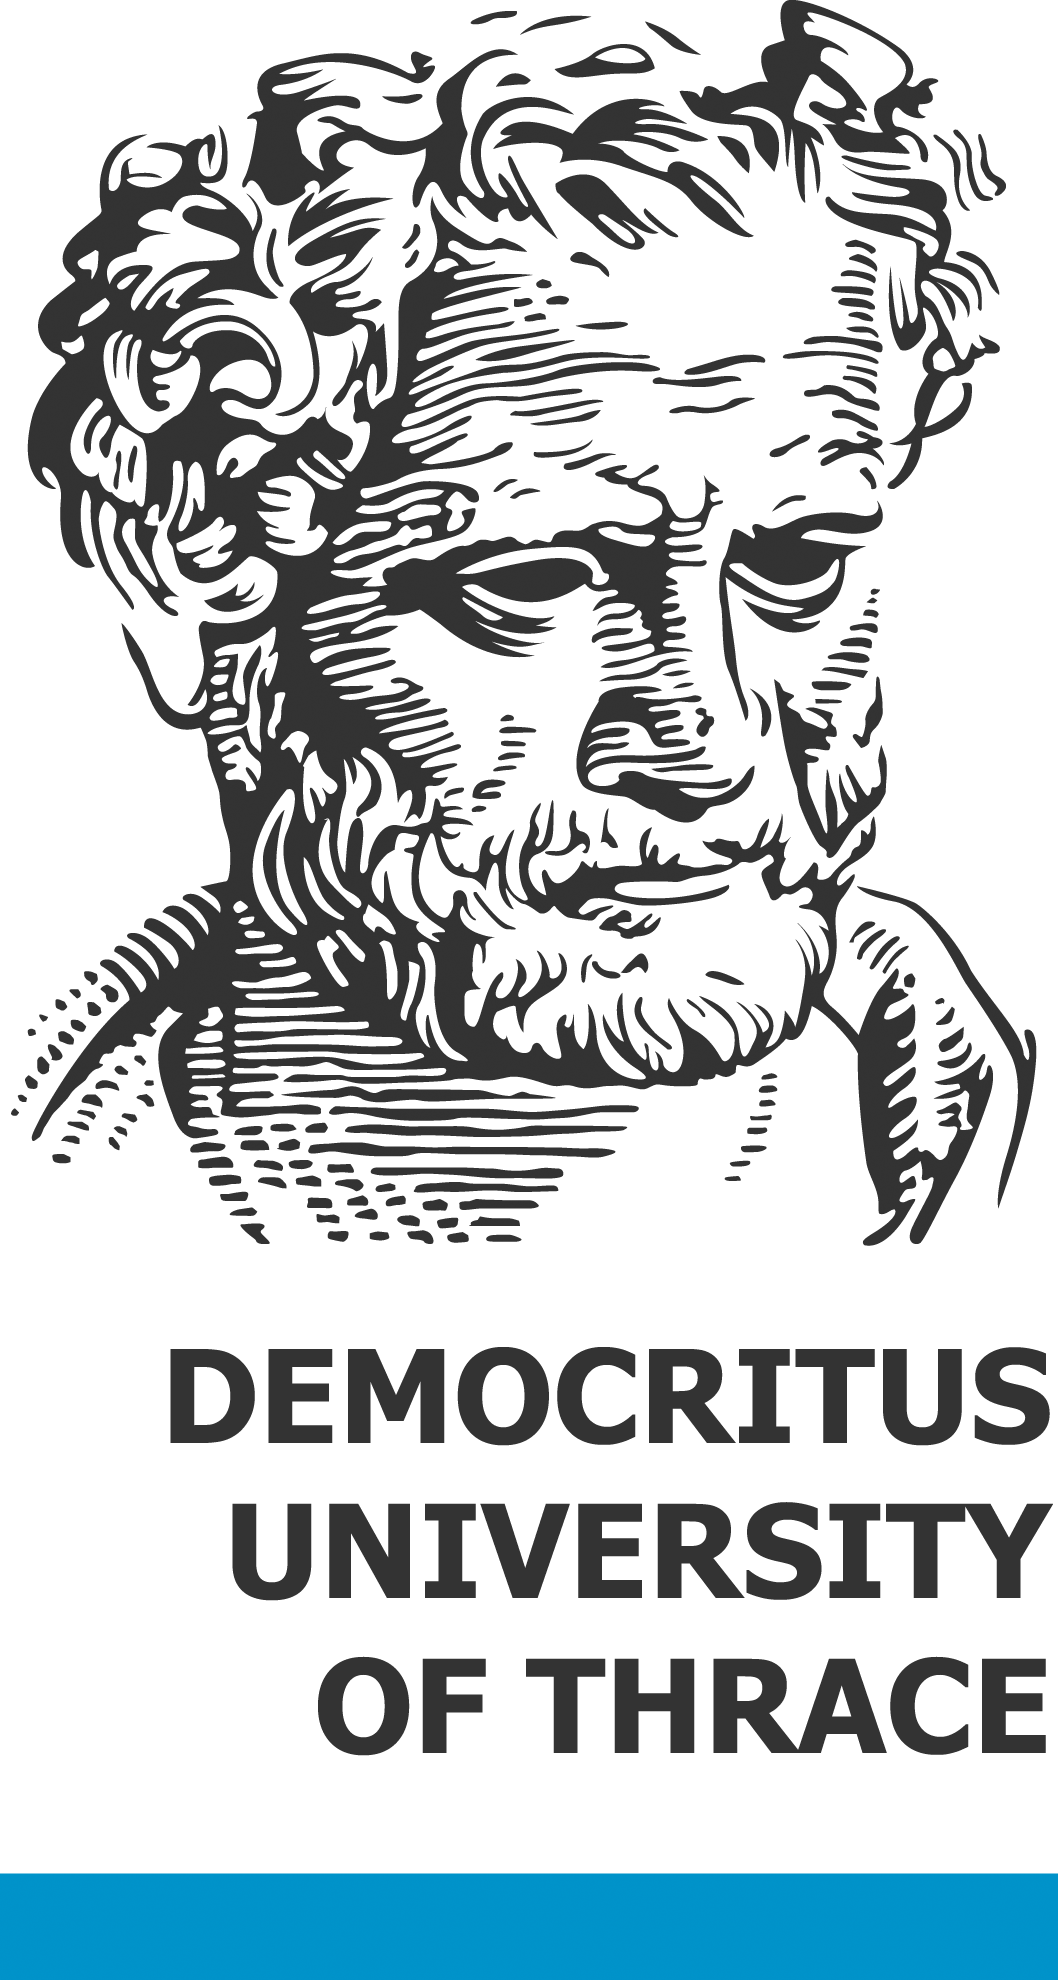 Democritus University of Thrace